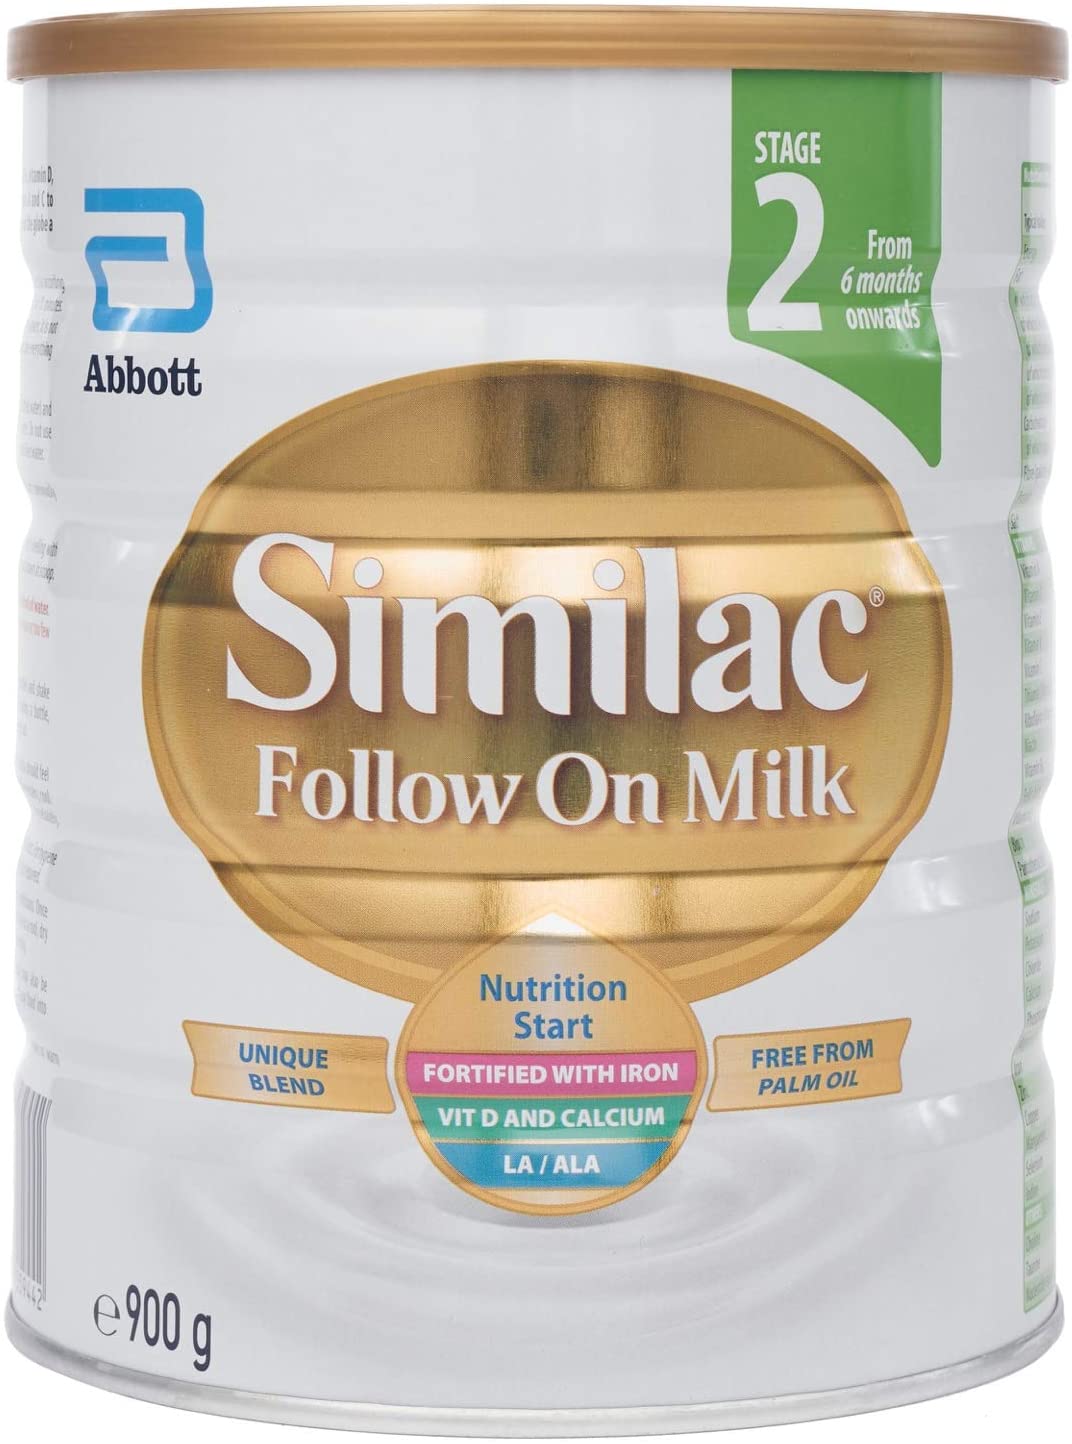 Similac Follow On Milk (Stage 2)